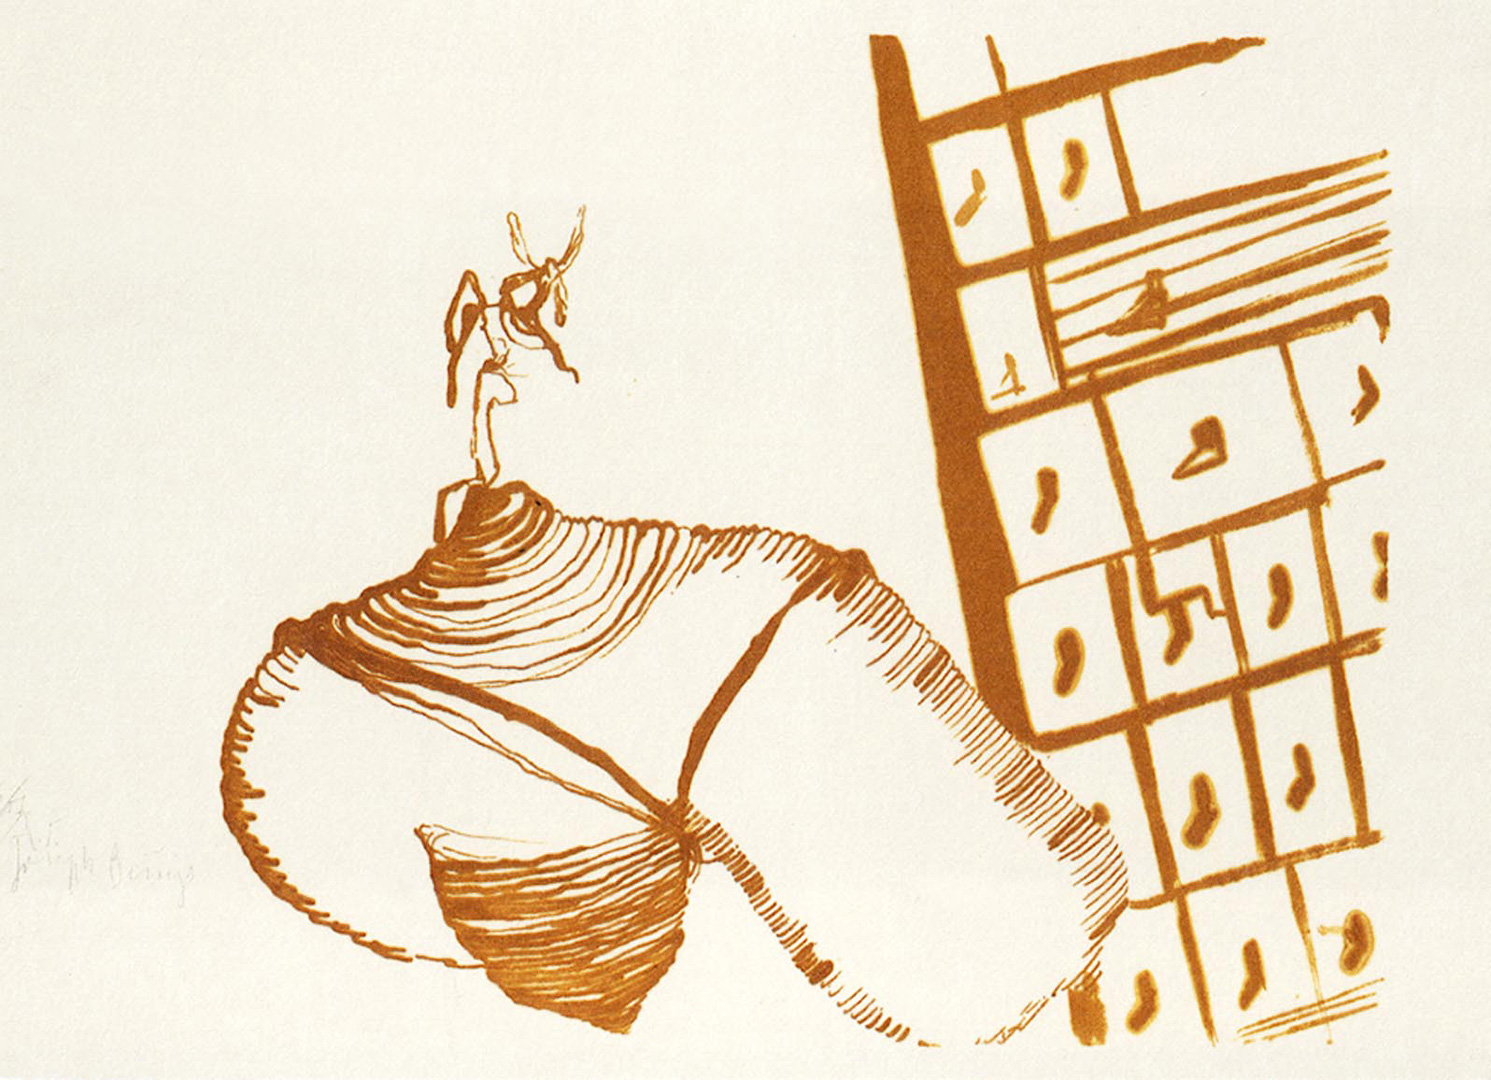 Joseph Beuys - ohne Titel, aus dem Portfolio Spur I, 1974, lithograph on white Rives Couronne paper